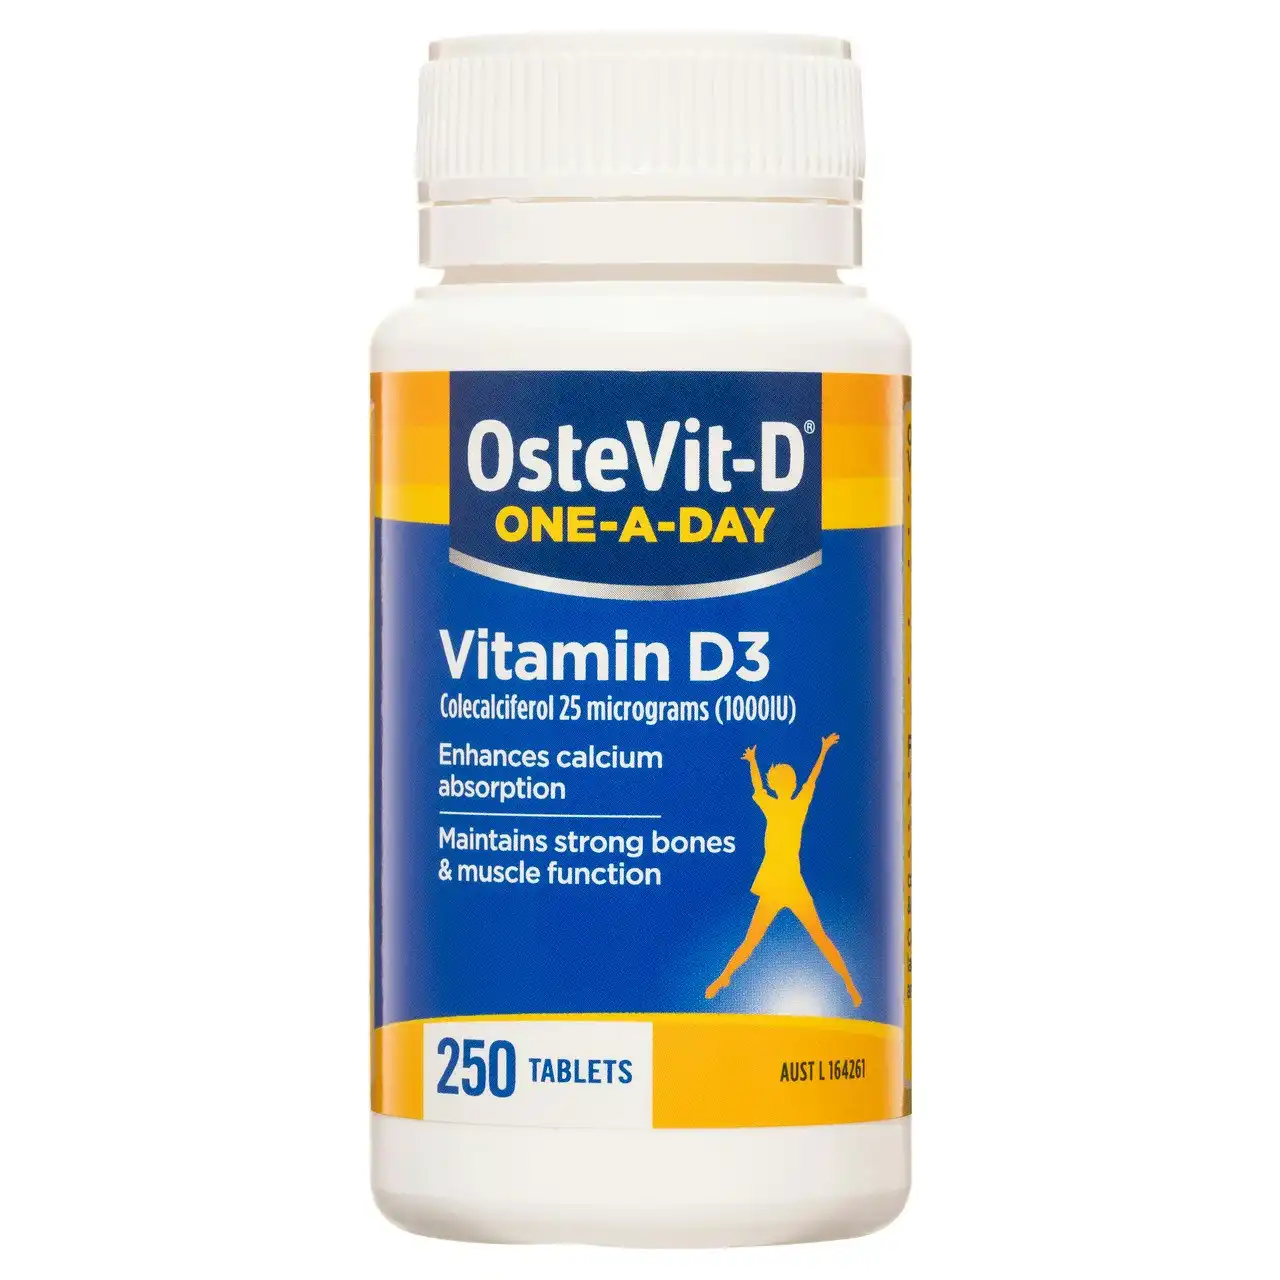 OsteVit-D One-A-Day Vitamin D3 250's Tablets